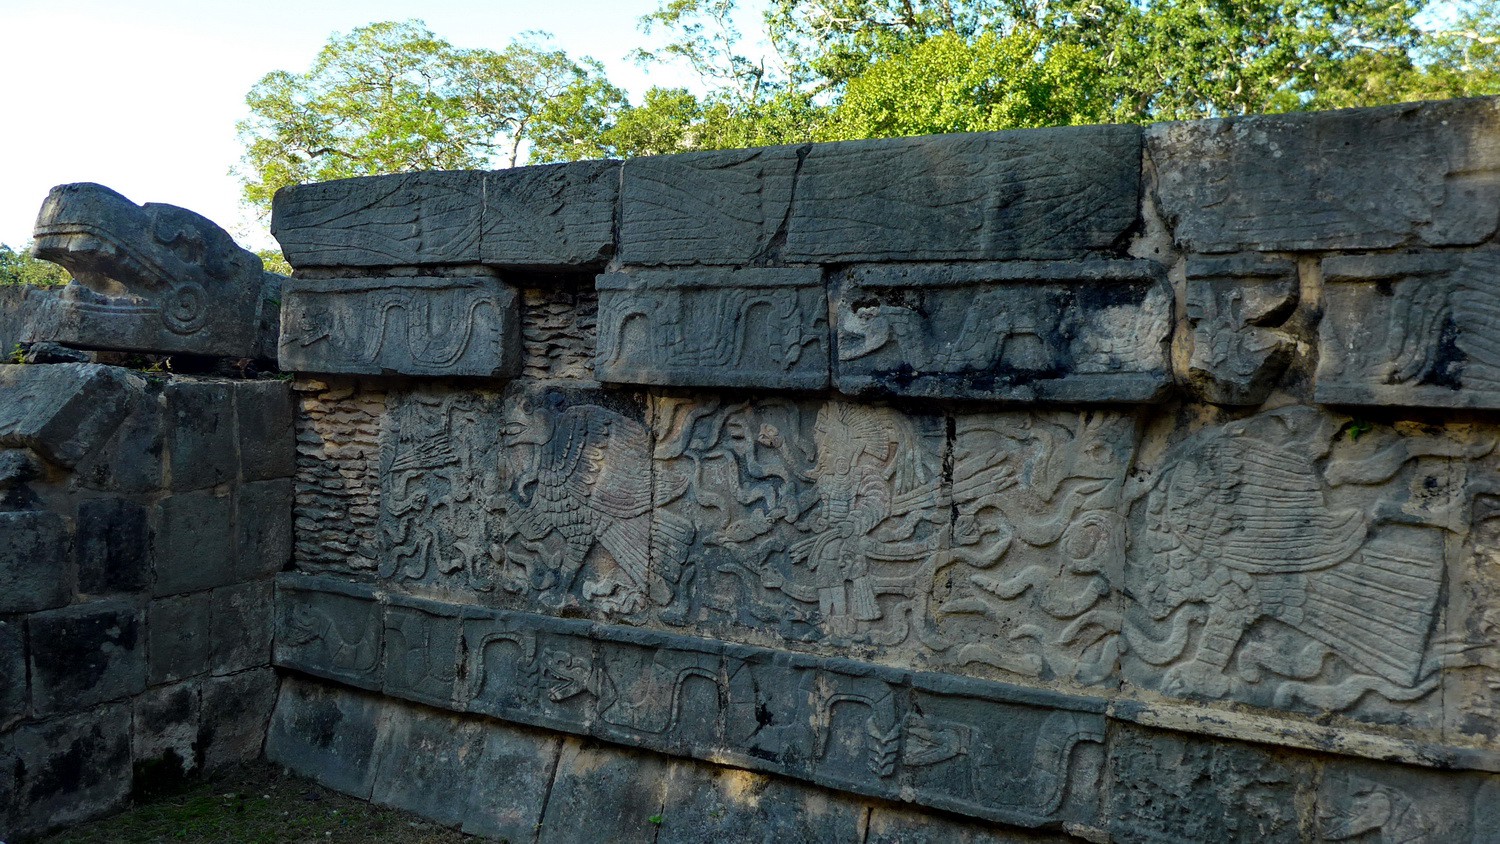 Maya relief